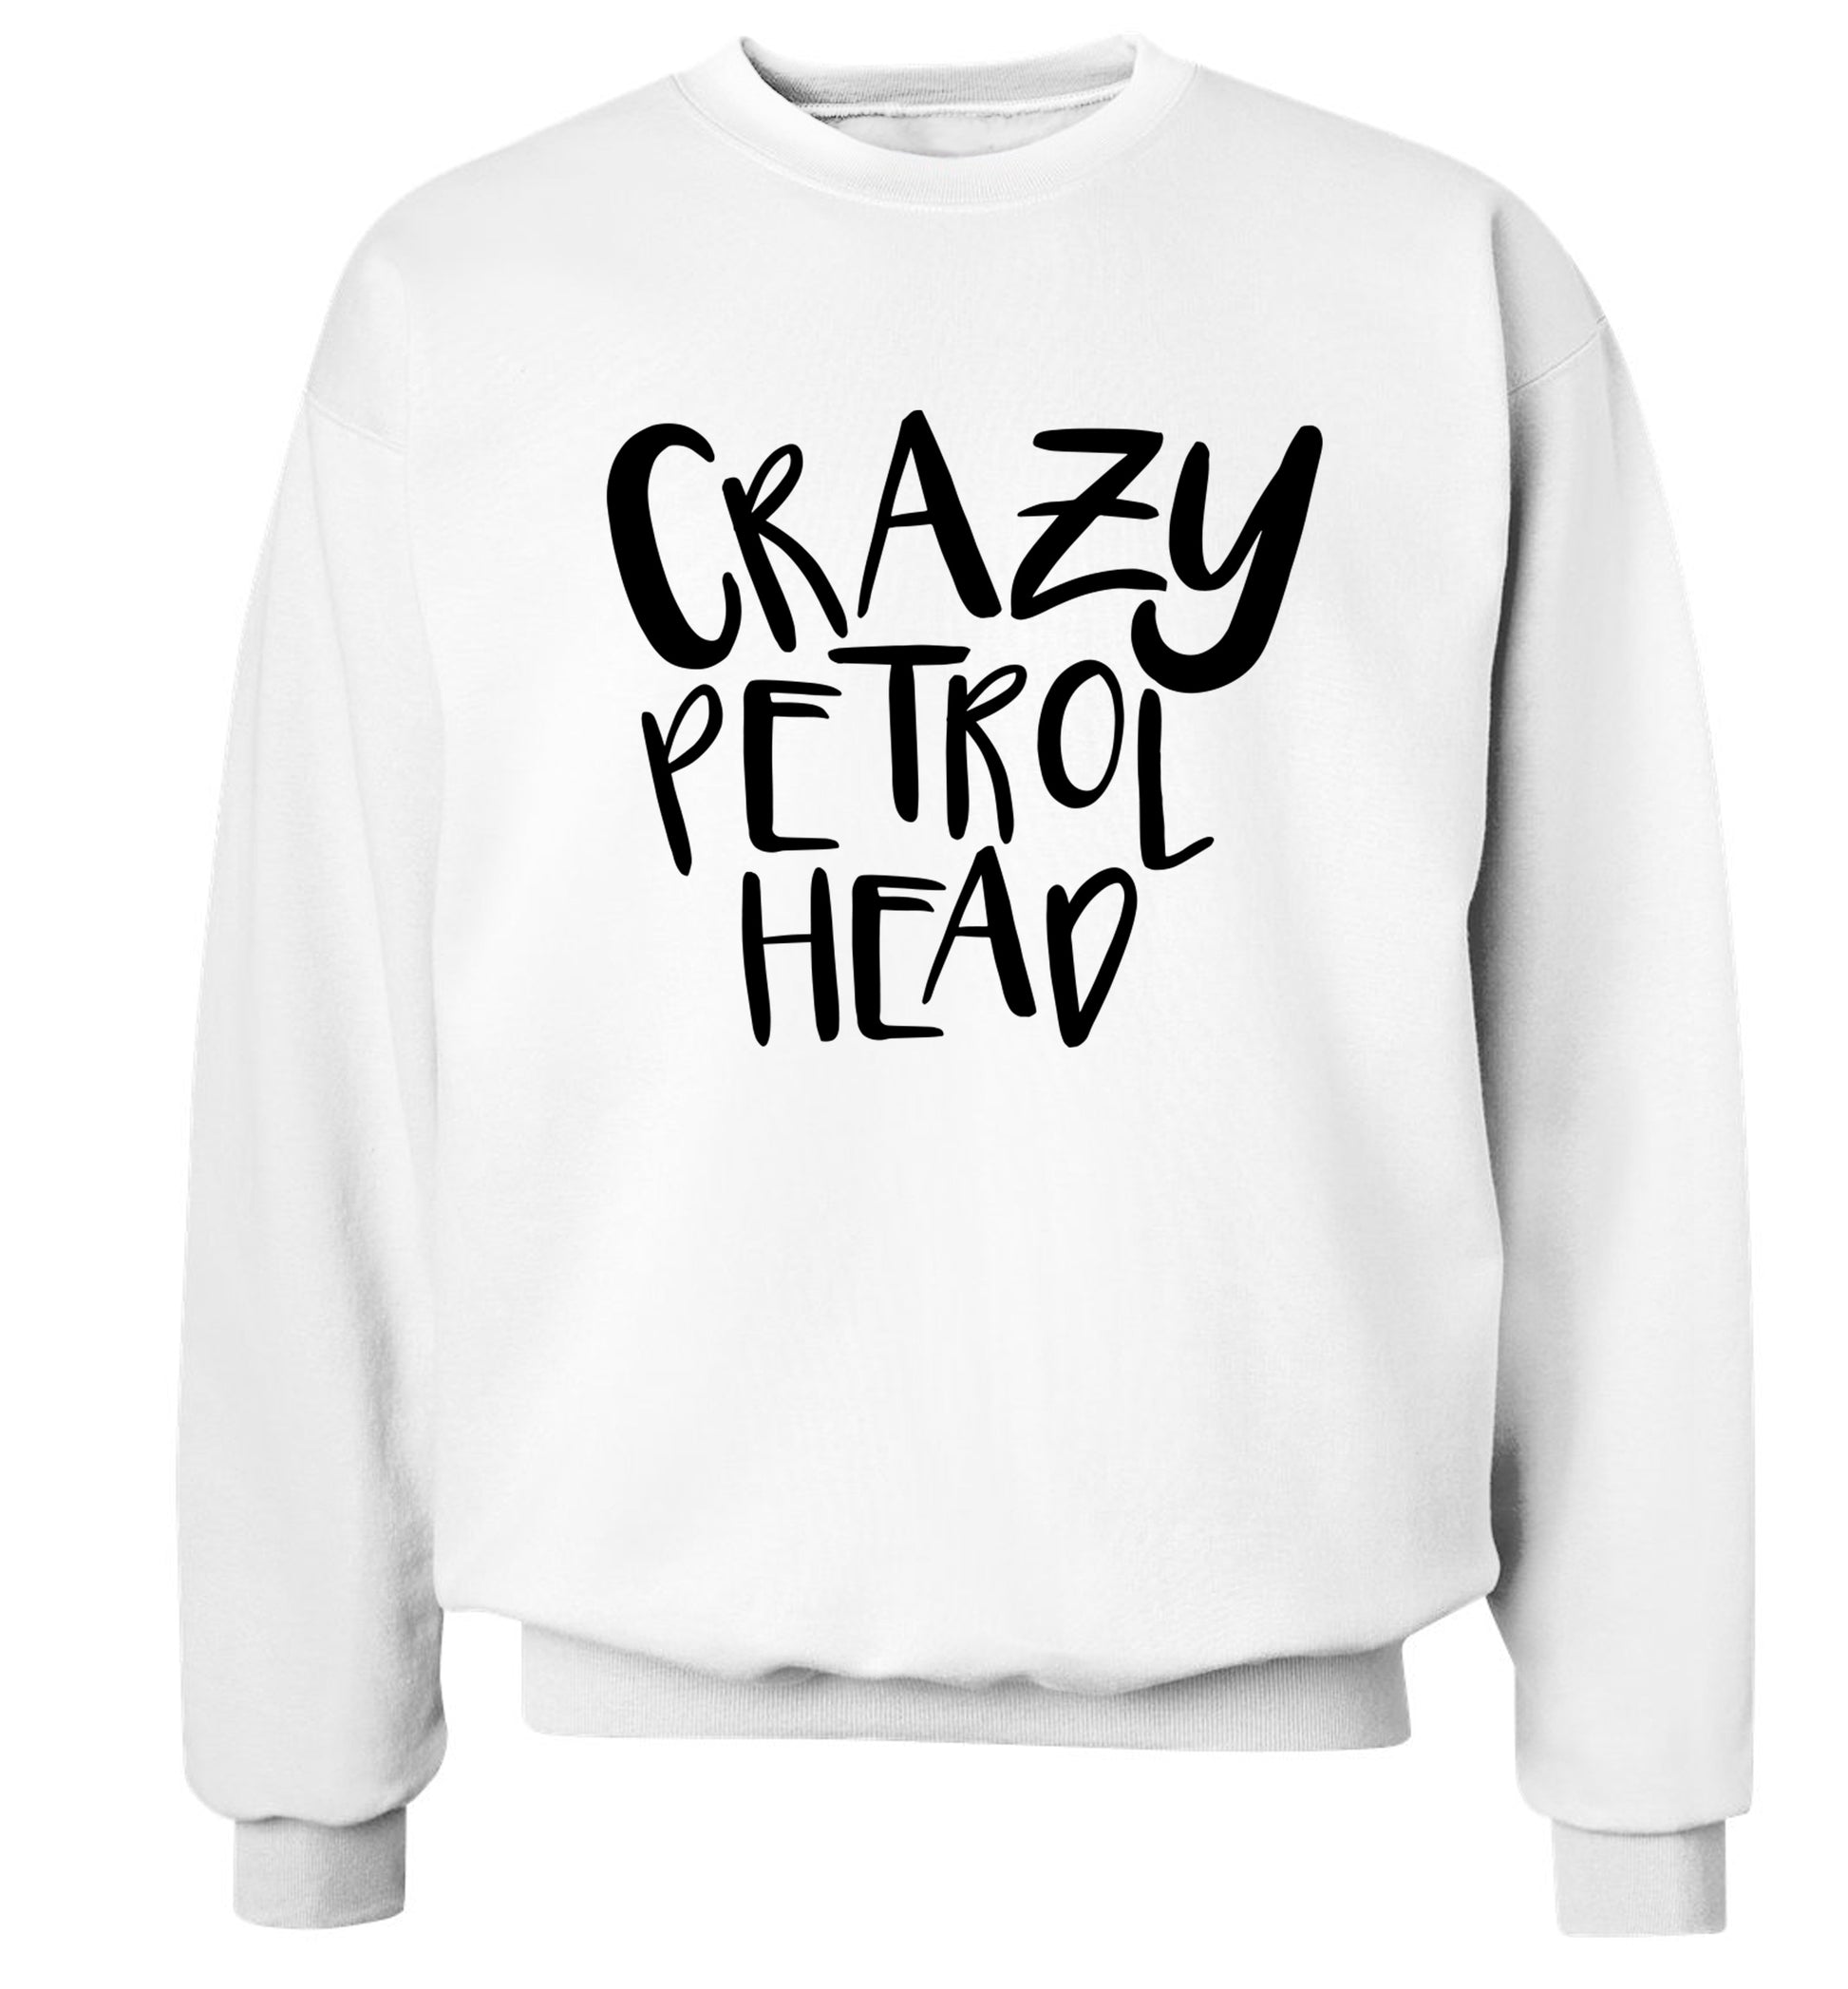 Crazy petrol head Adult's unisex white Sweater 2XL